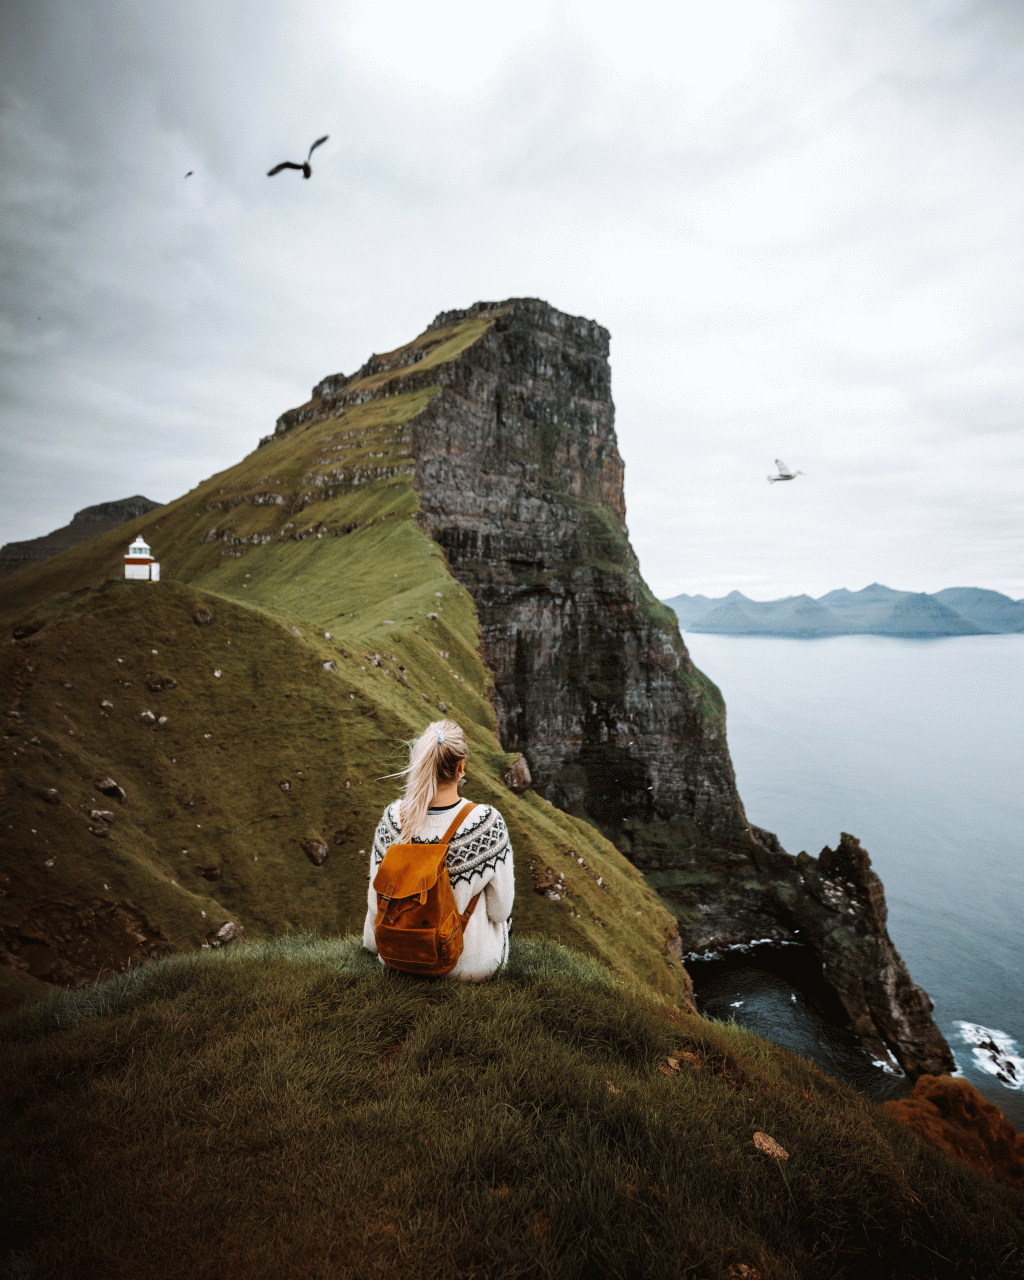 Female enjoying the view at Kallurin, in the Faroe Islands